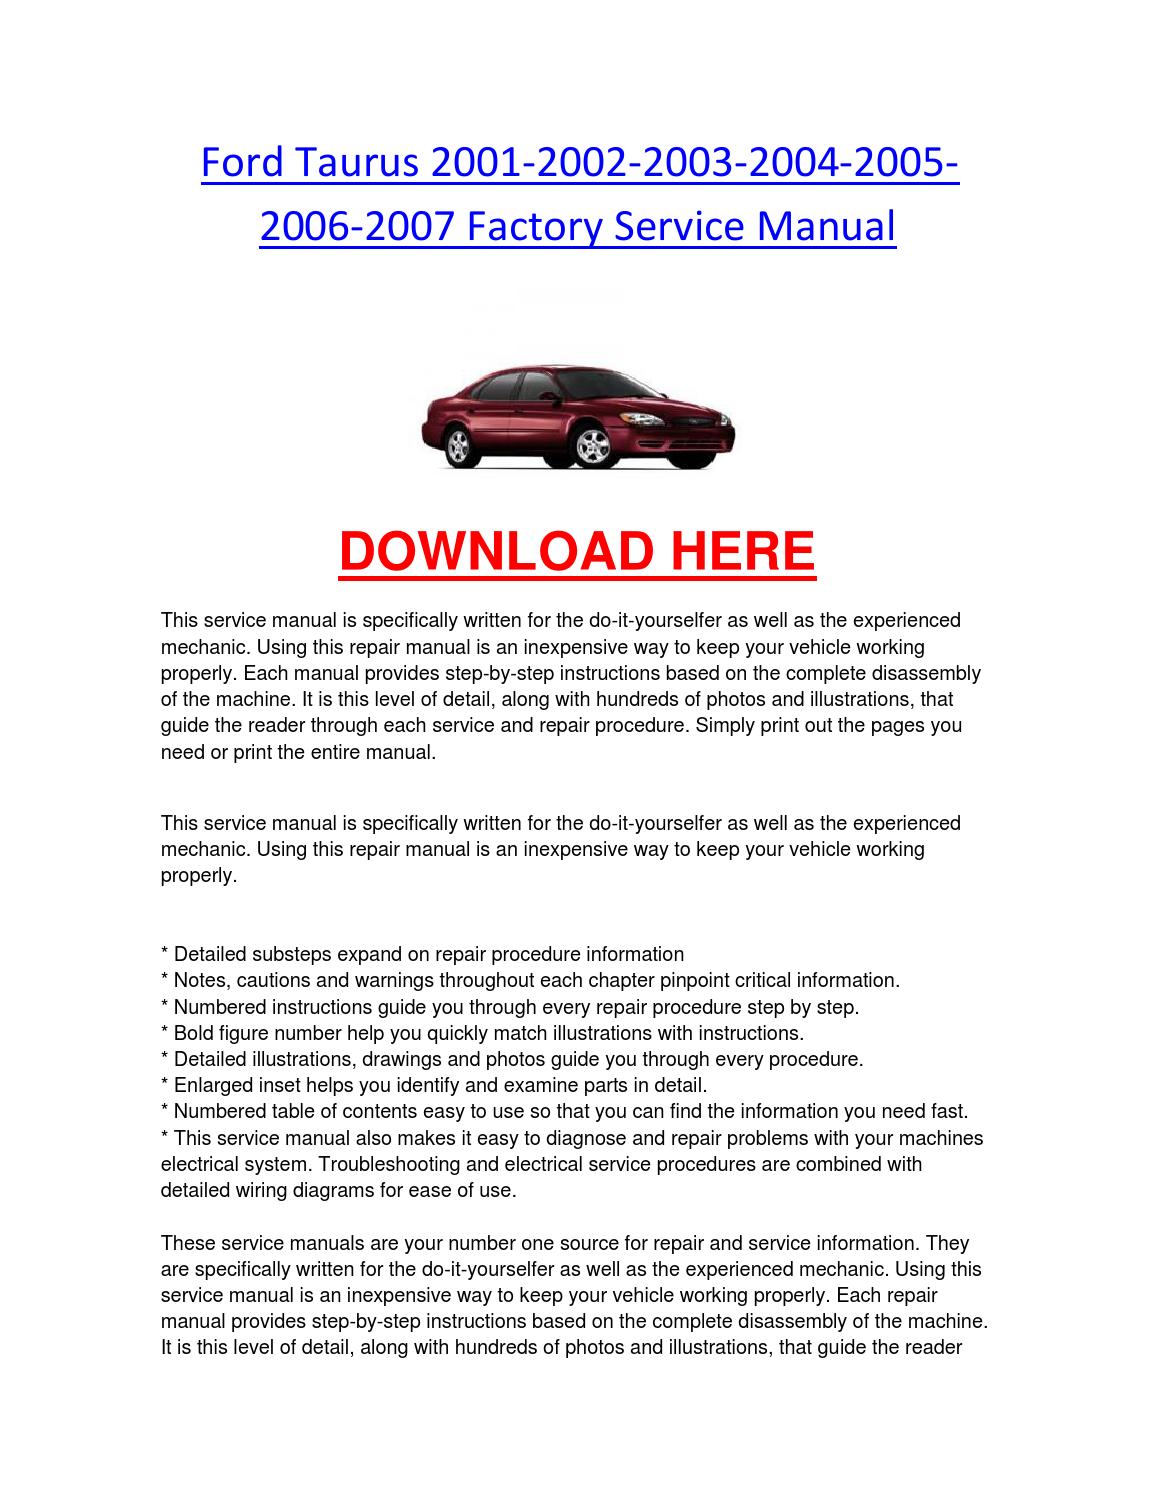 Ford taurus 2003 manual